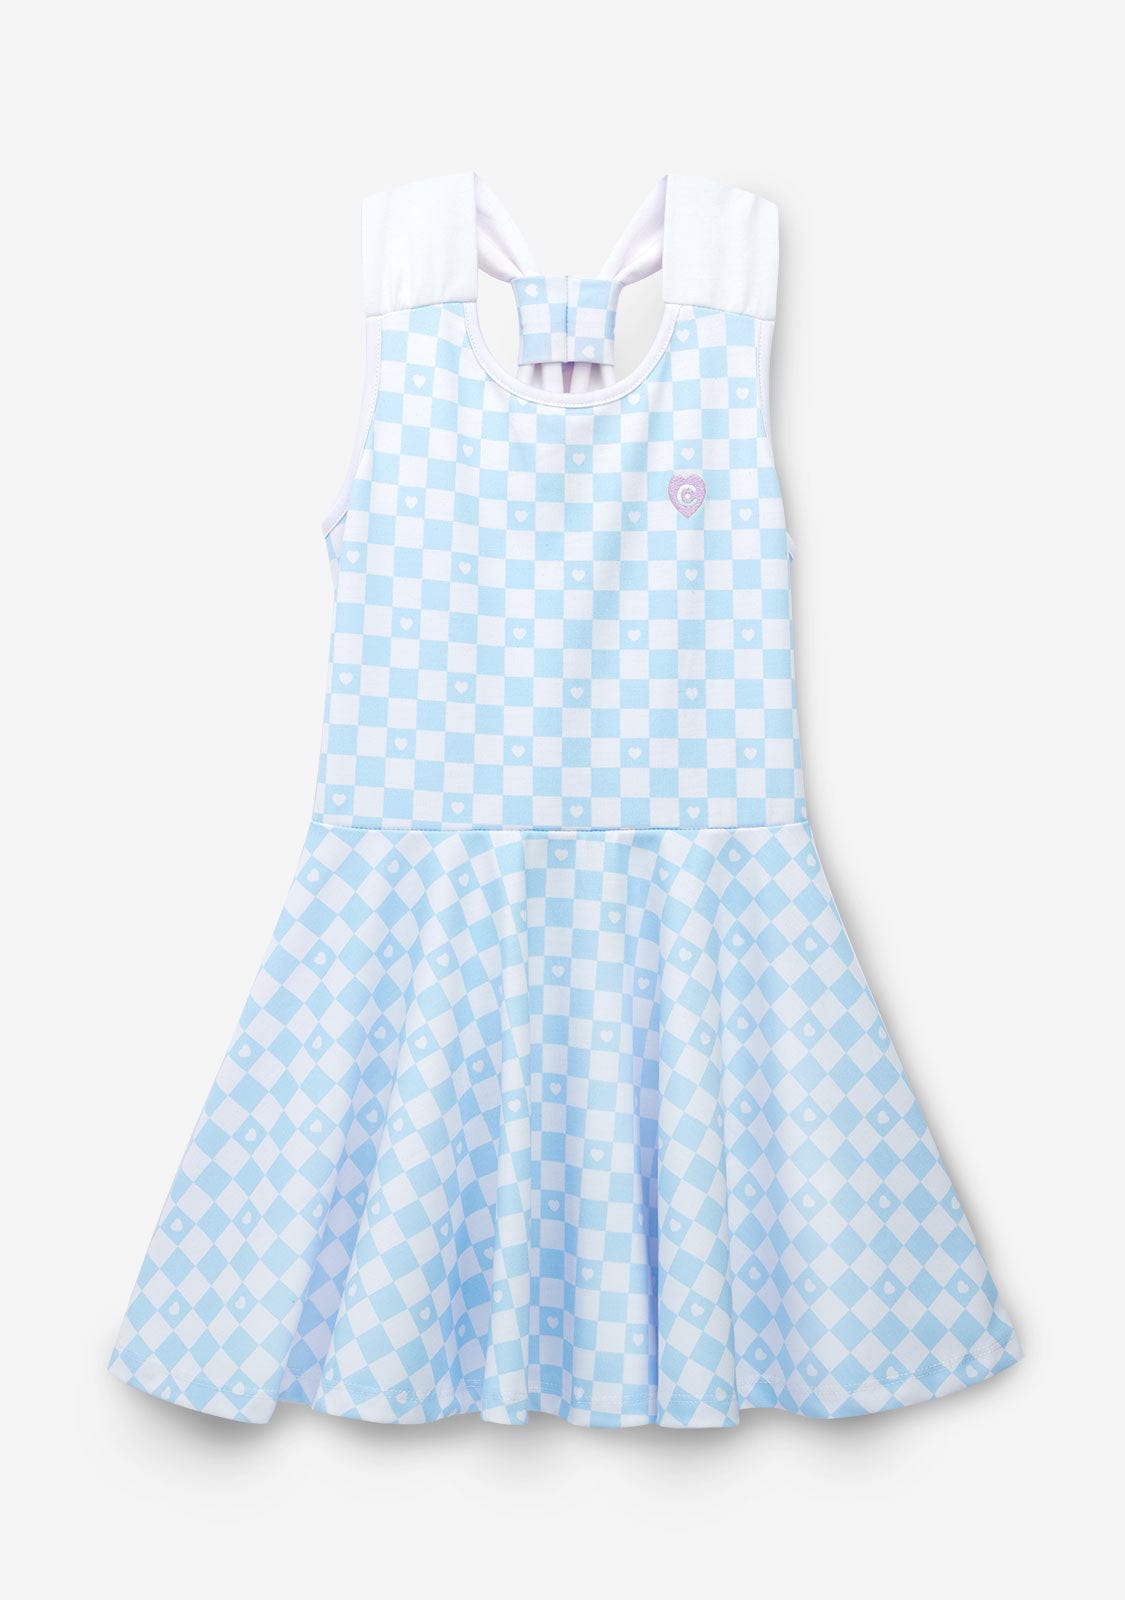 CONGUITOS TEXTIL Clothing Girl's Light Blue Checkerboard Skater Dress